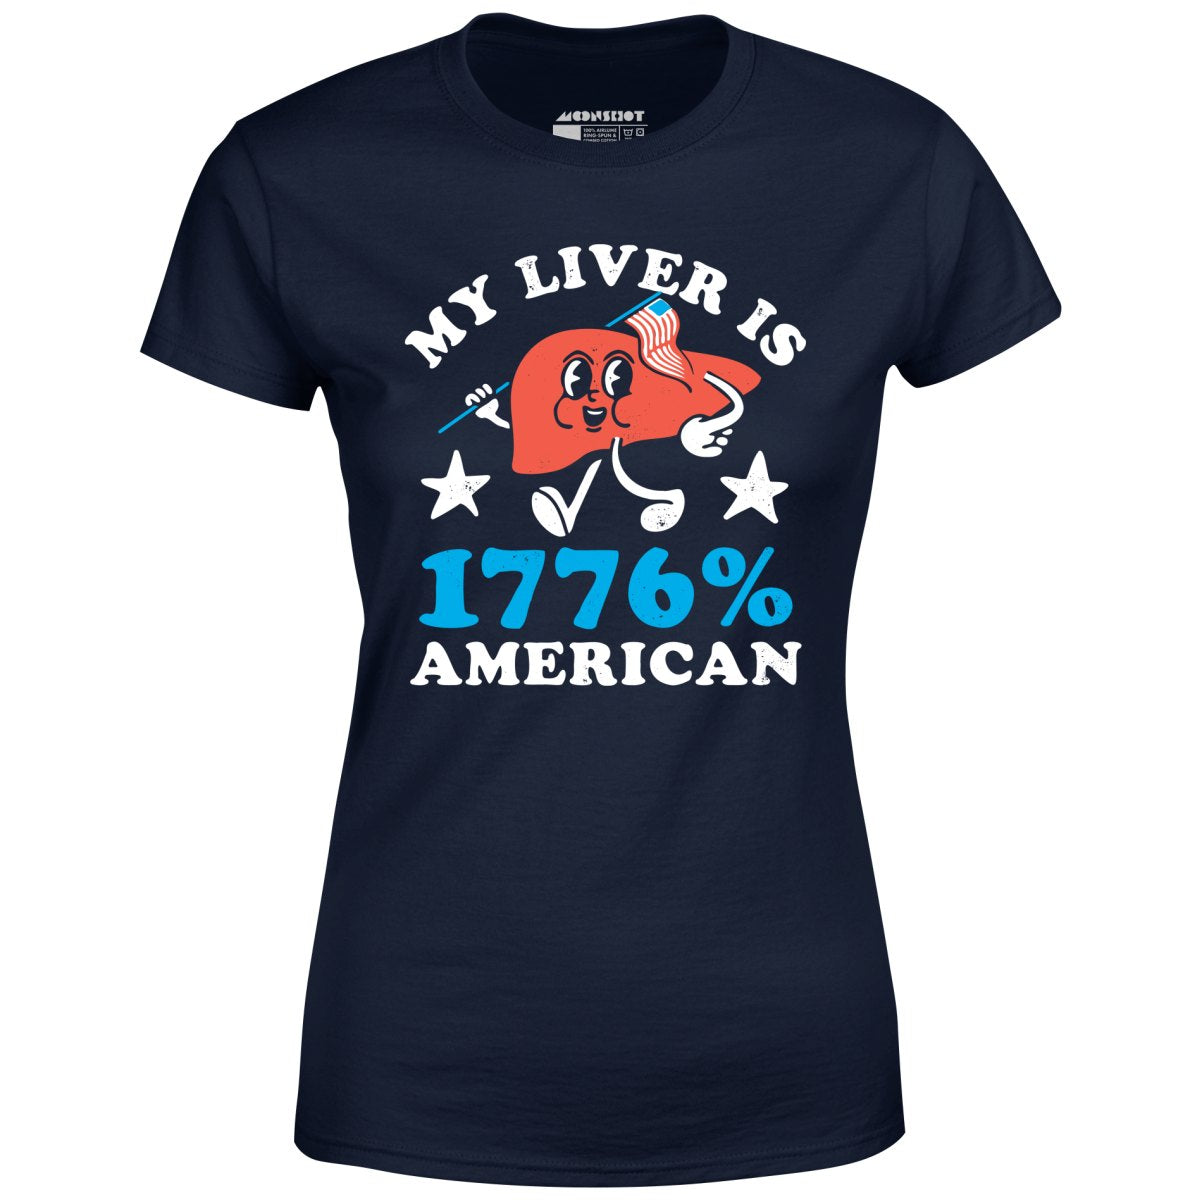 My Liver is 1776 Percent American - Women's T-Shirt